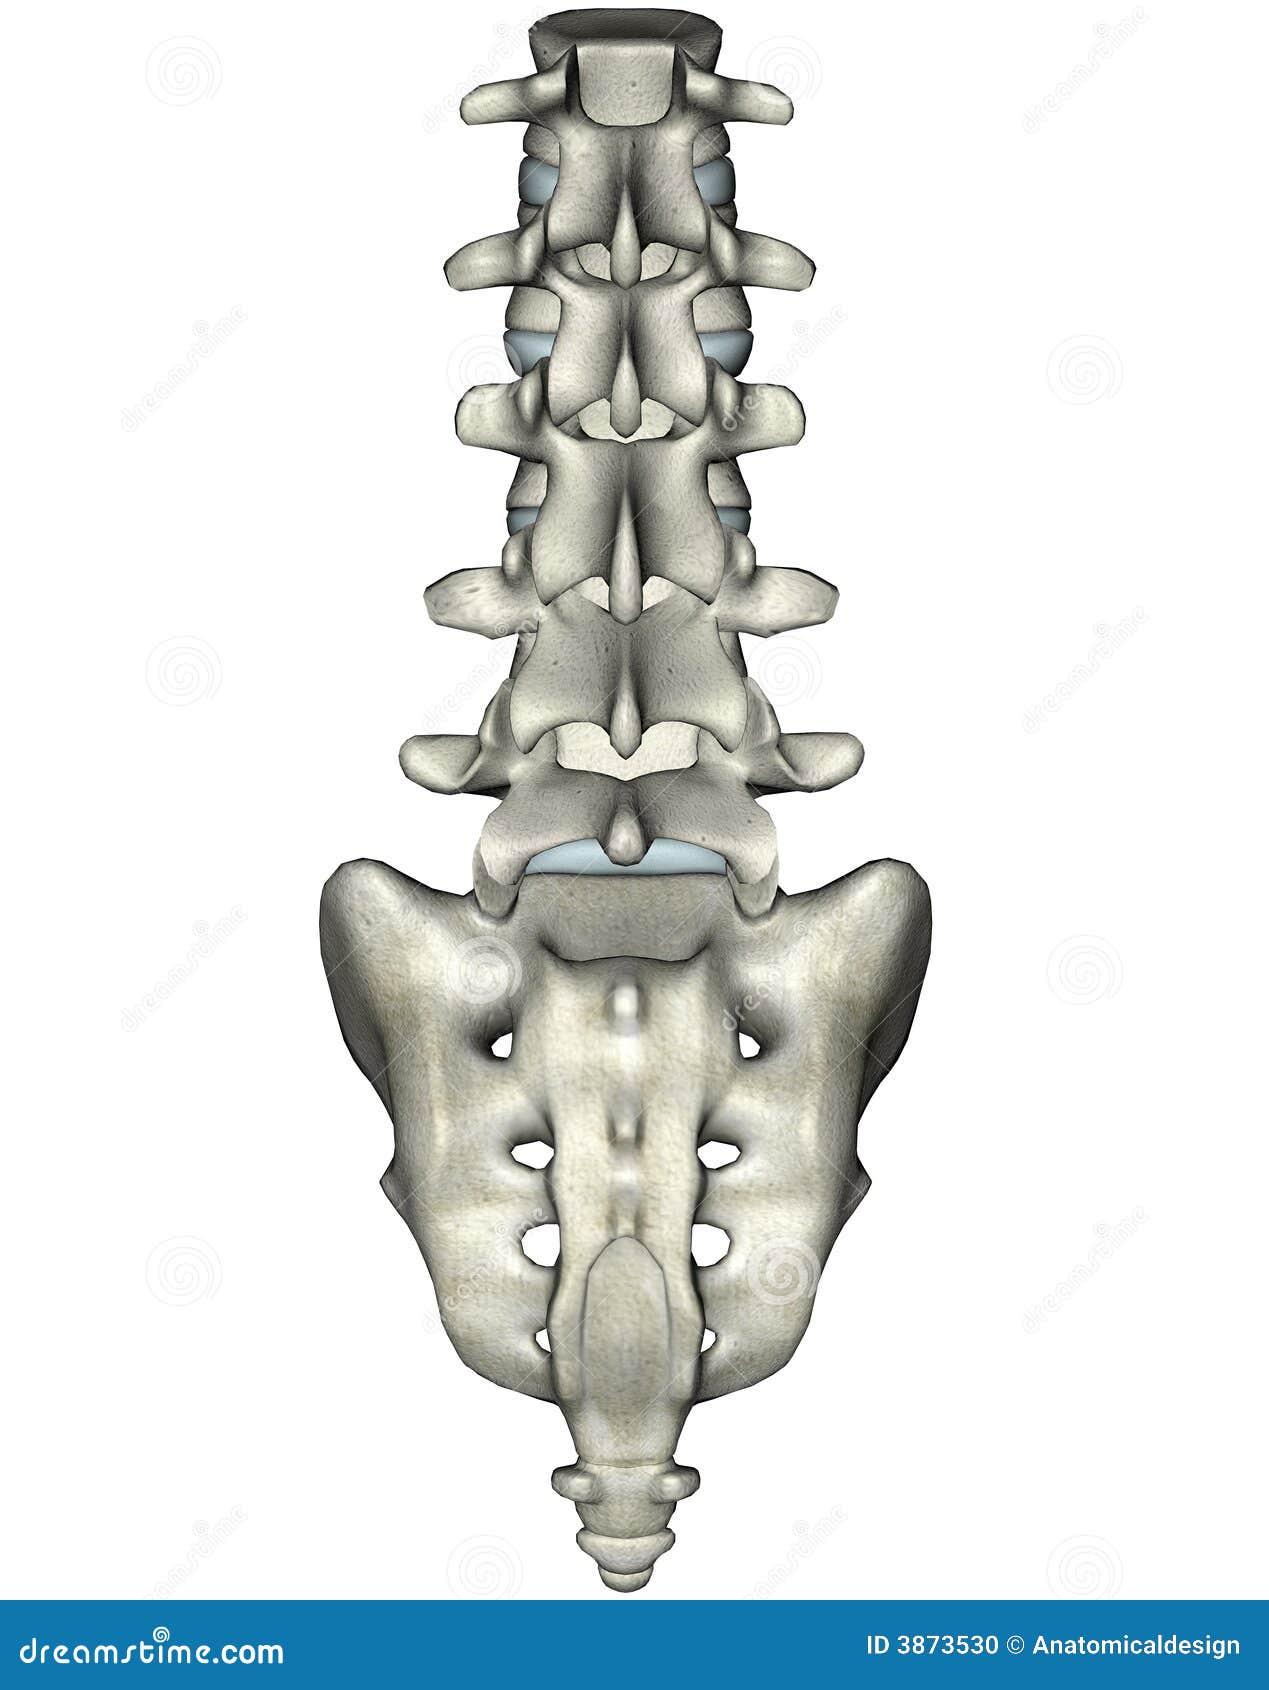 human posterior lumbosacral spine